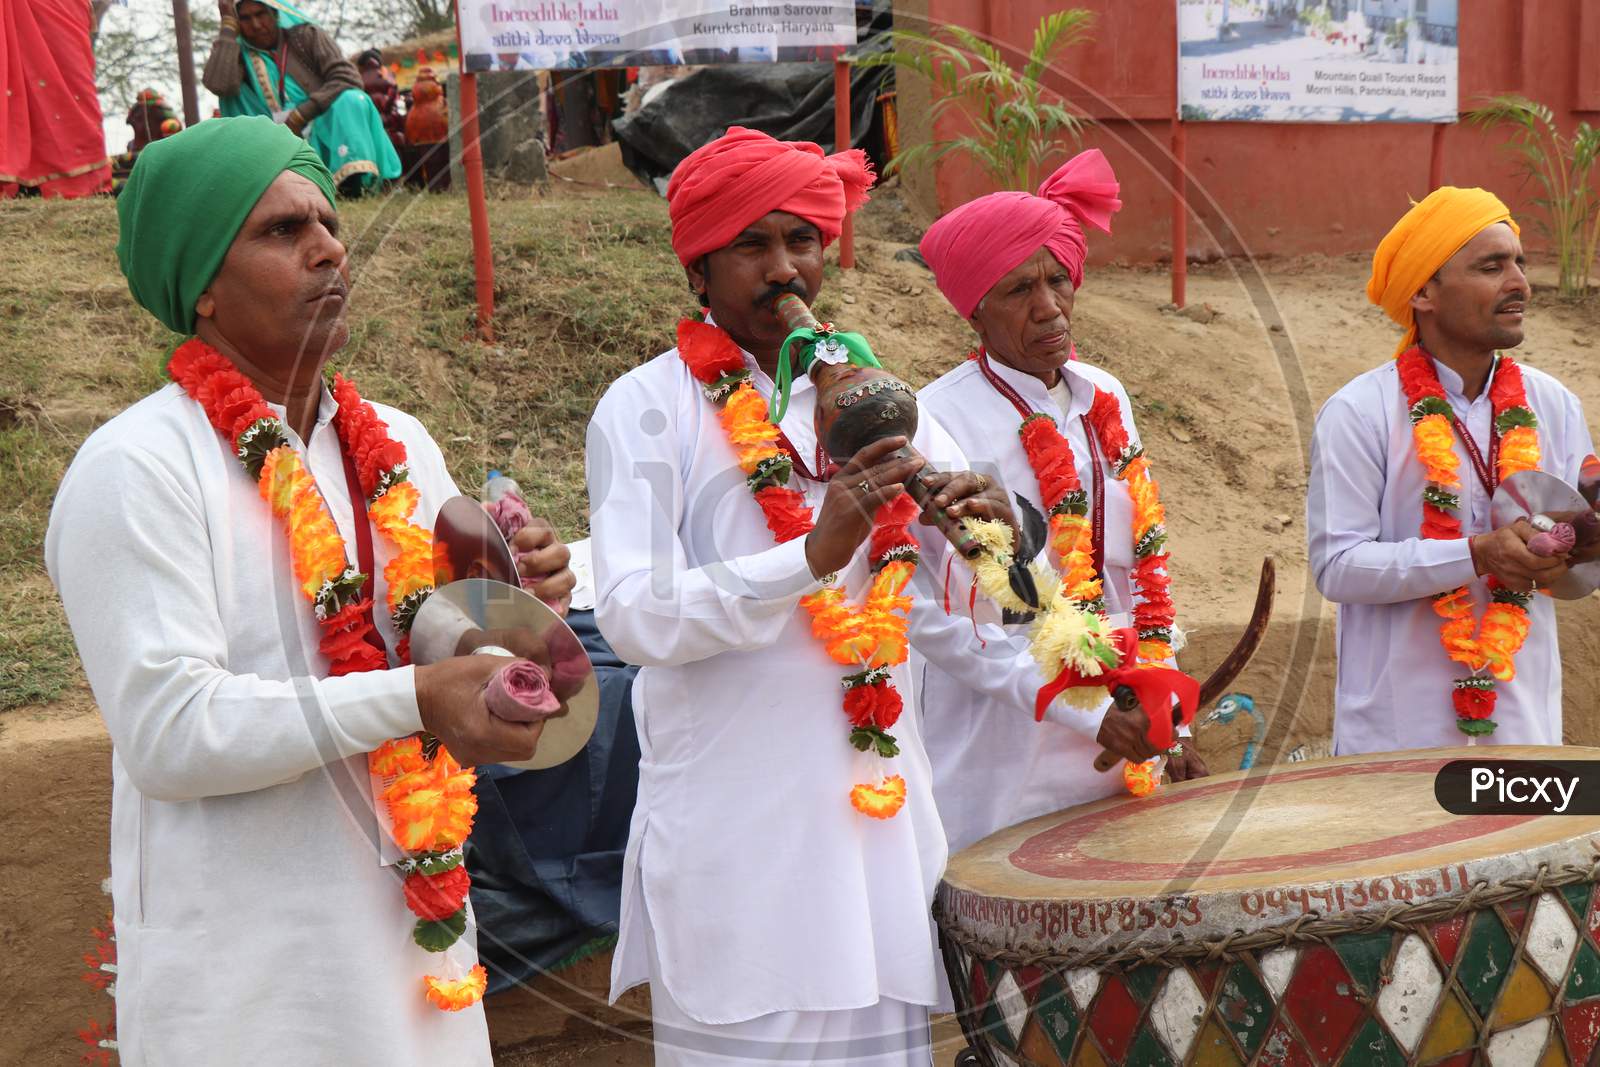 INDIA-HARYANA-SURAJKUND-2018 Folk artists performing at International Surajkund Crafts Mela